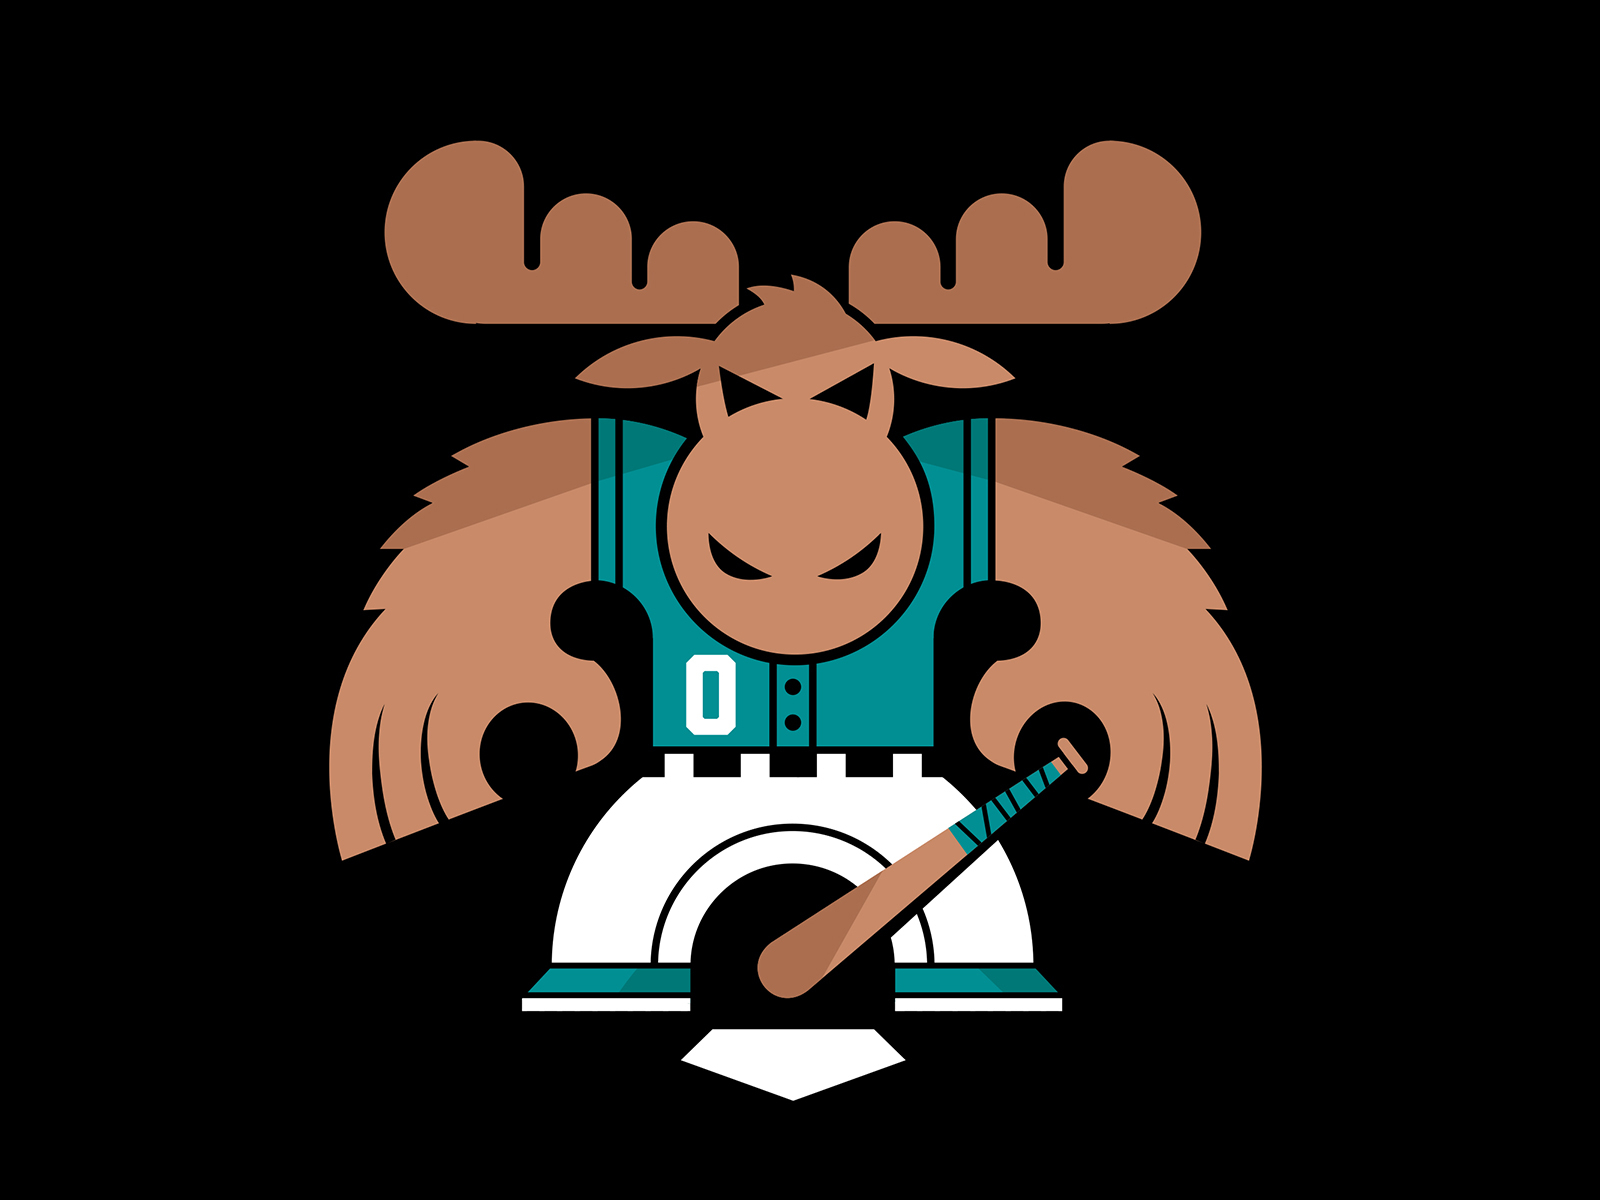 Mariners Moose by Matt Naylor on Dribbble